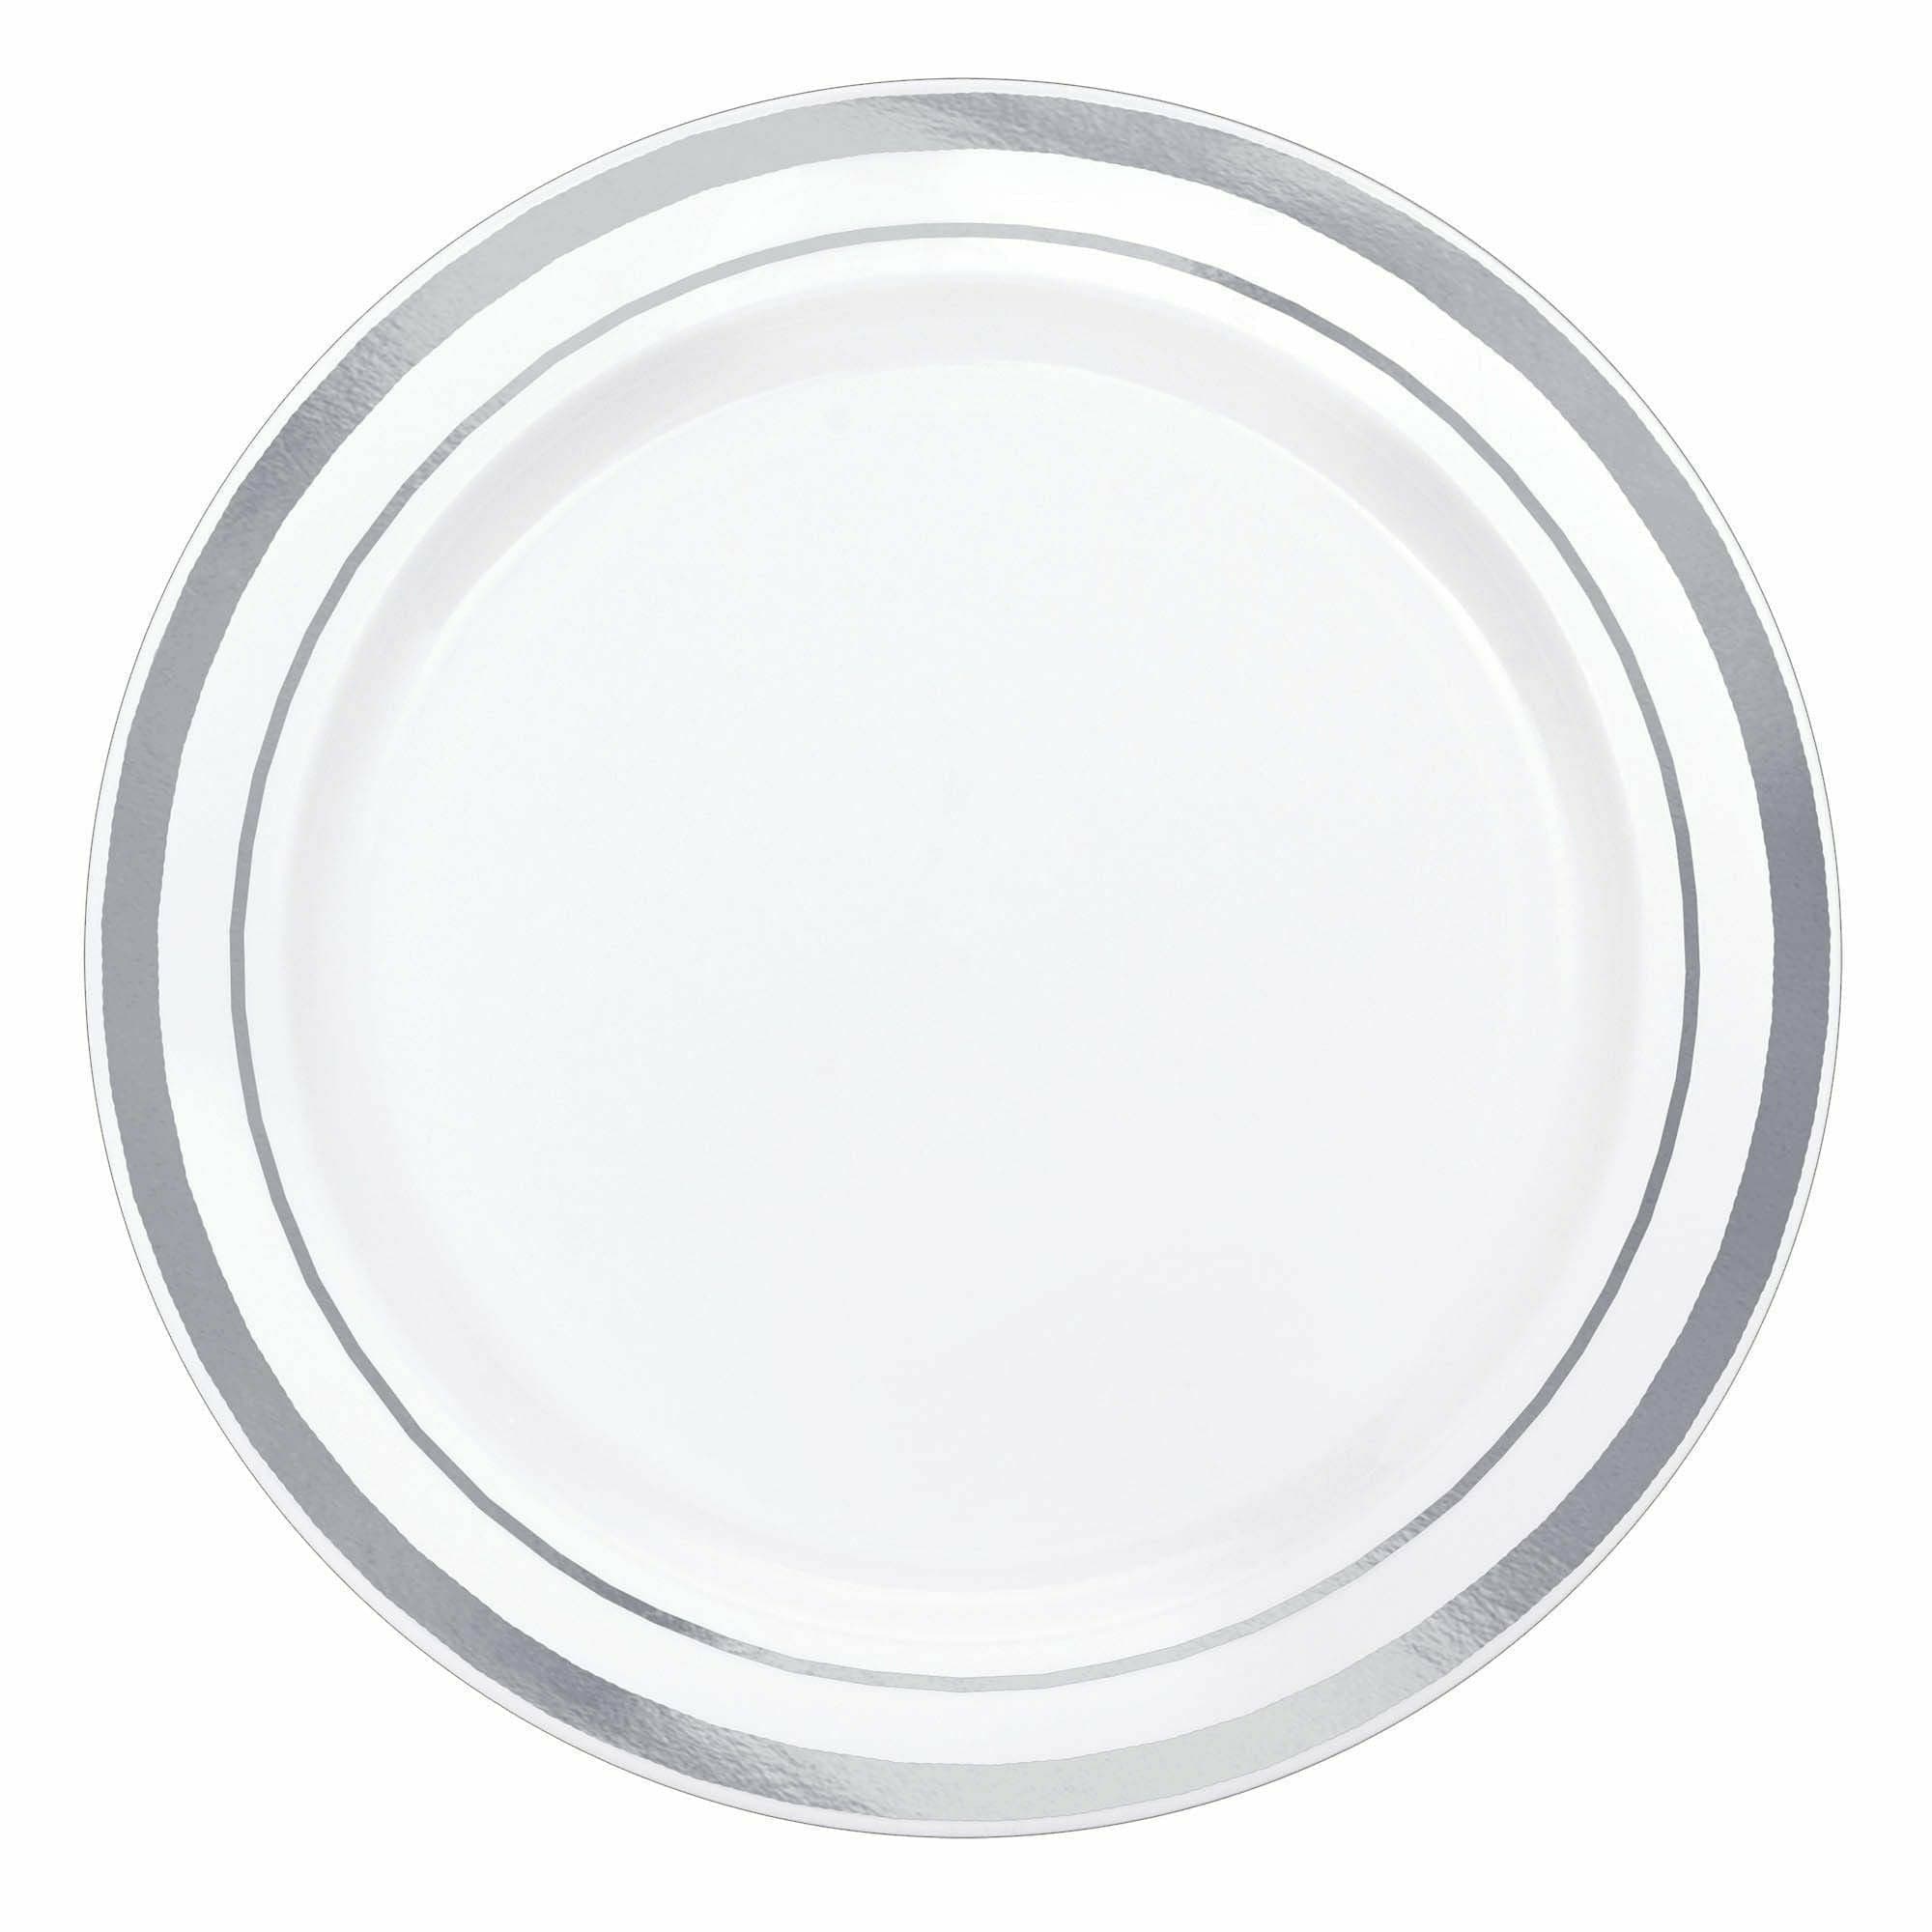 Amscan BASIC White Premium Plastic Round Plates with Silver Trim